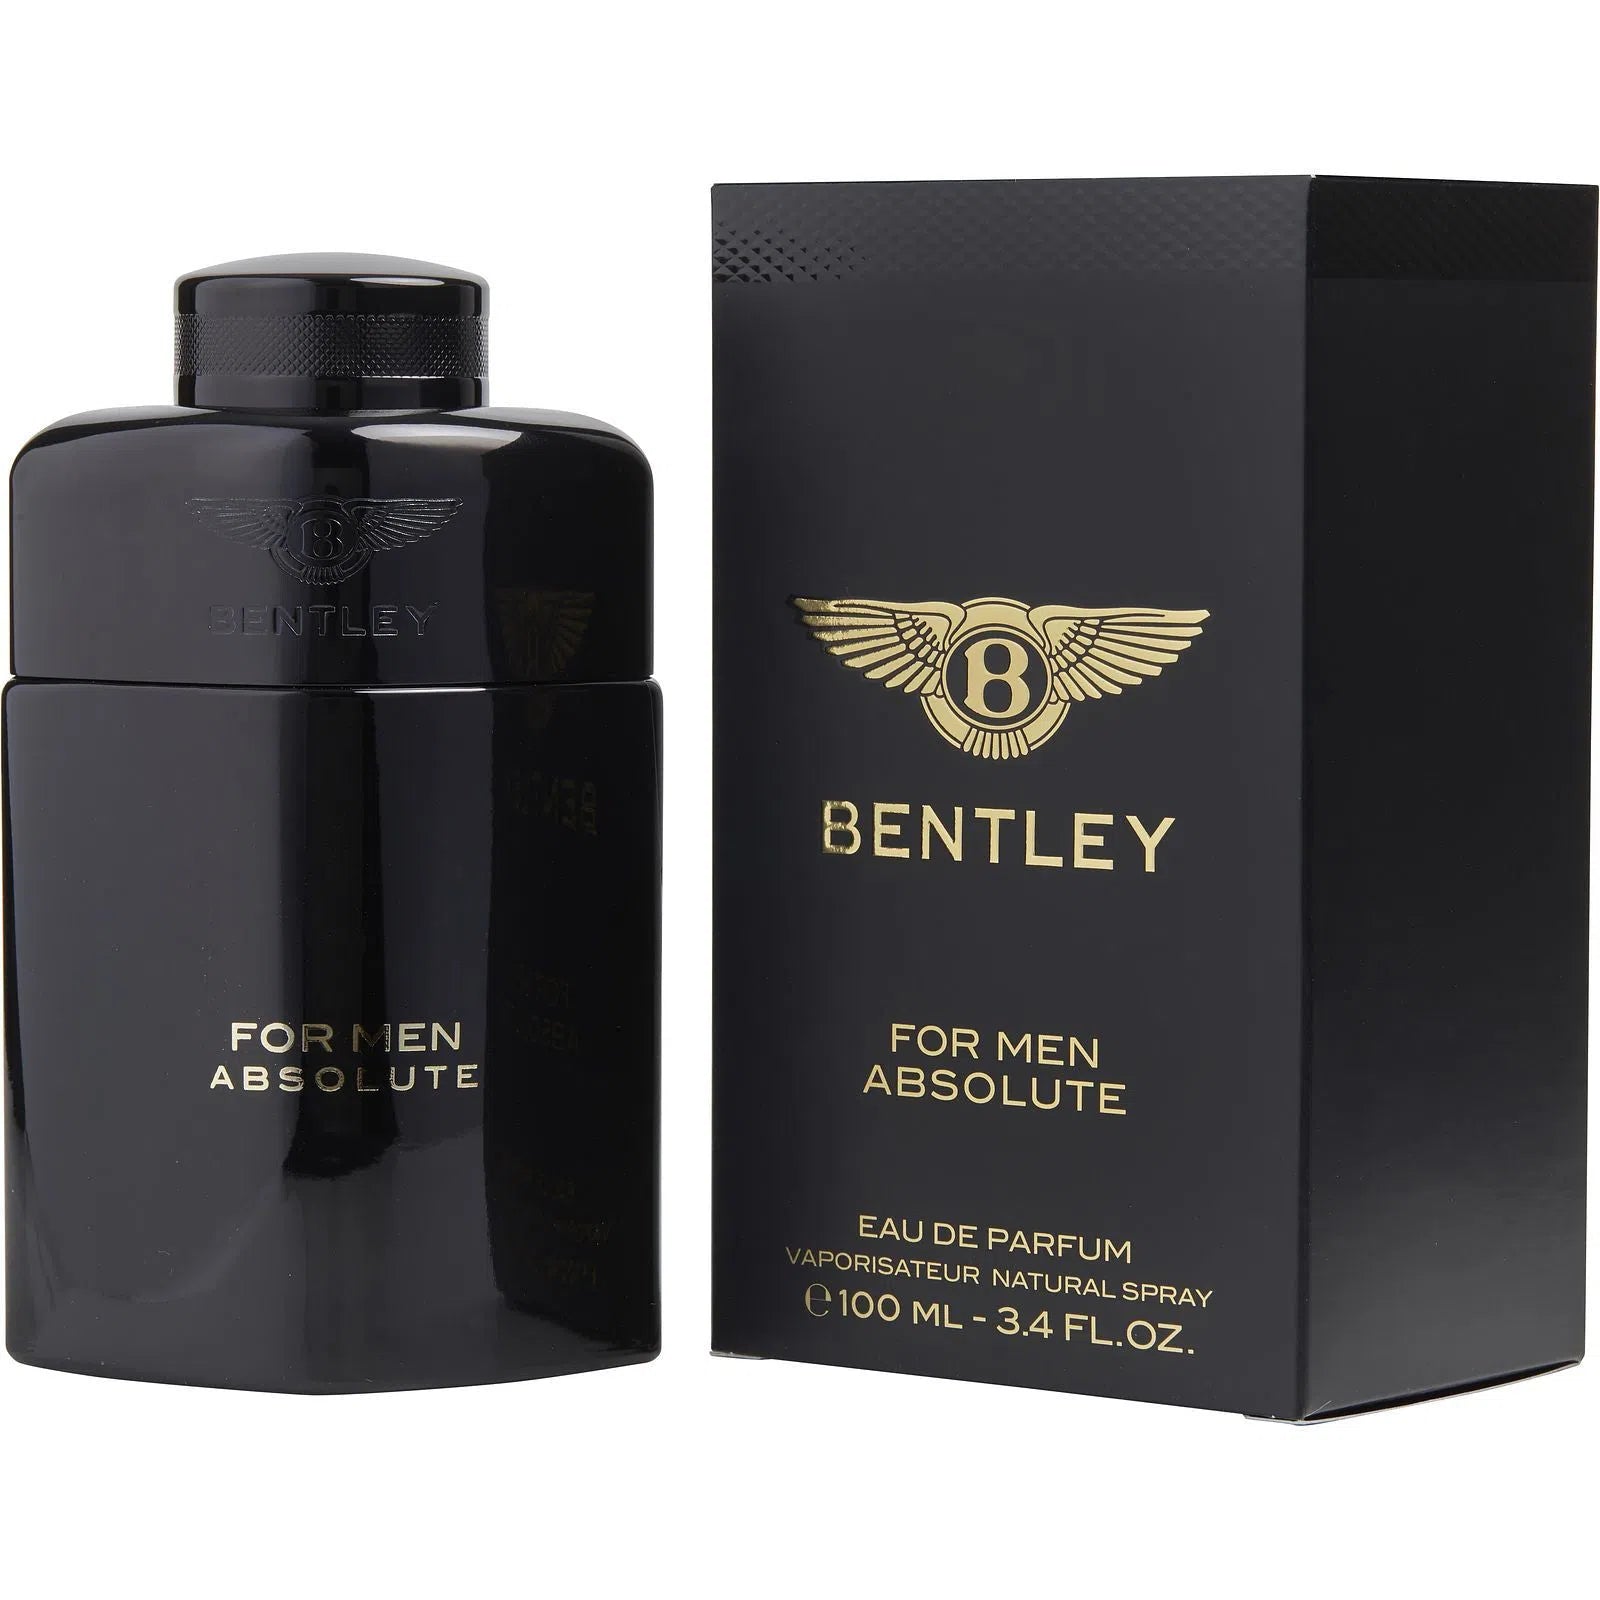 Perfume Bentley For Men Absolute EDP (M) / 100 ml - 7640111508243- Prive Perfumes Honduras